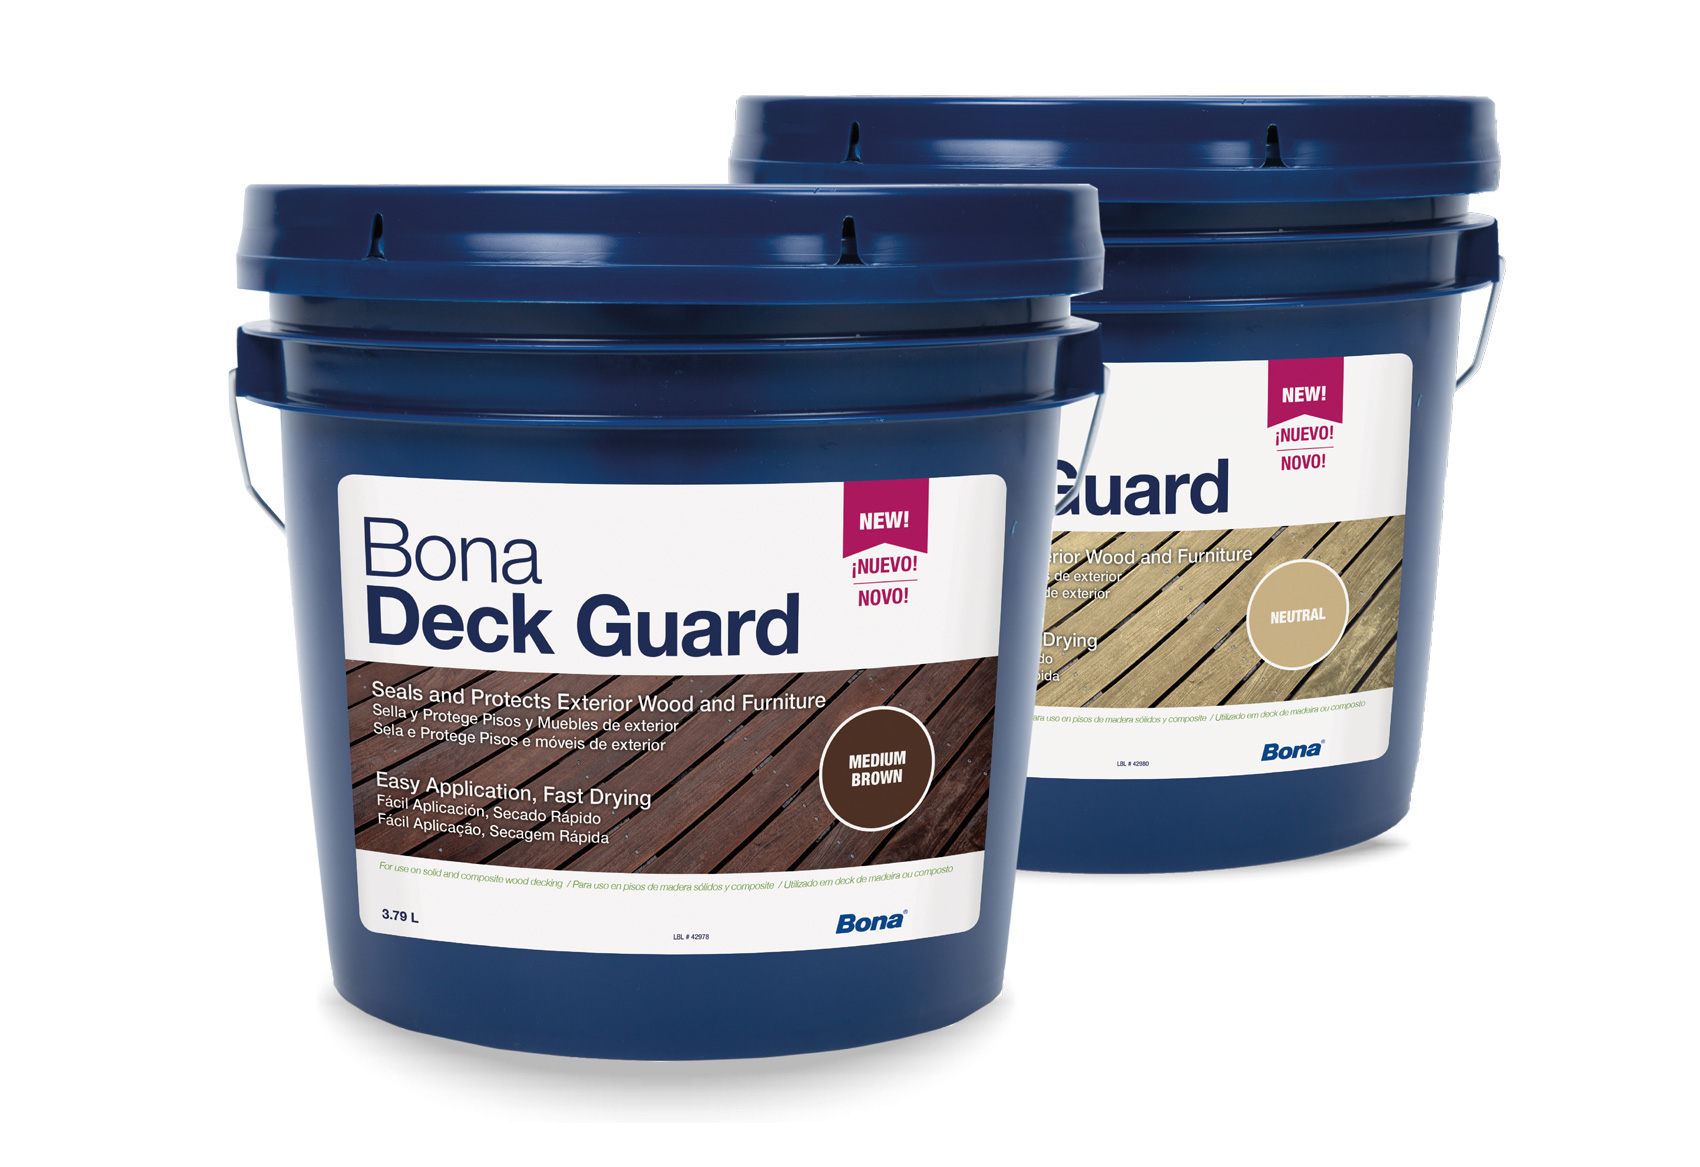 Bona Deck Guard Range